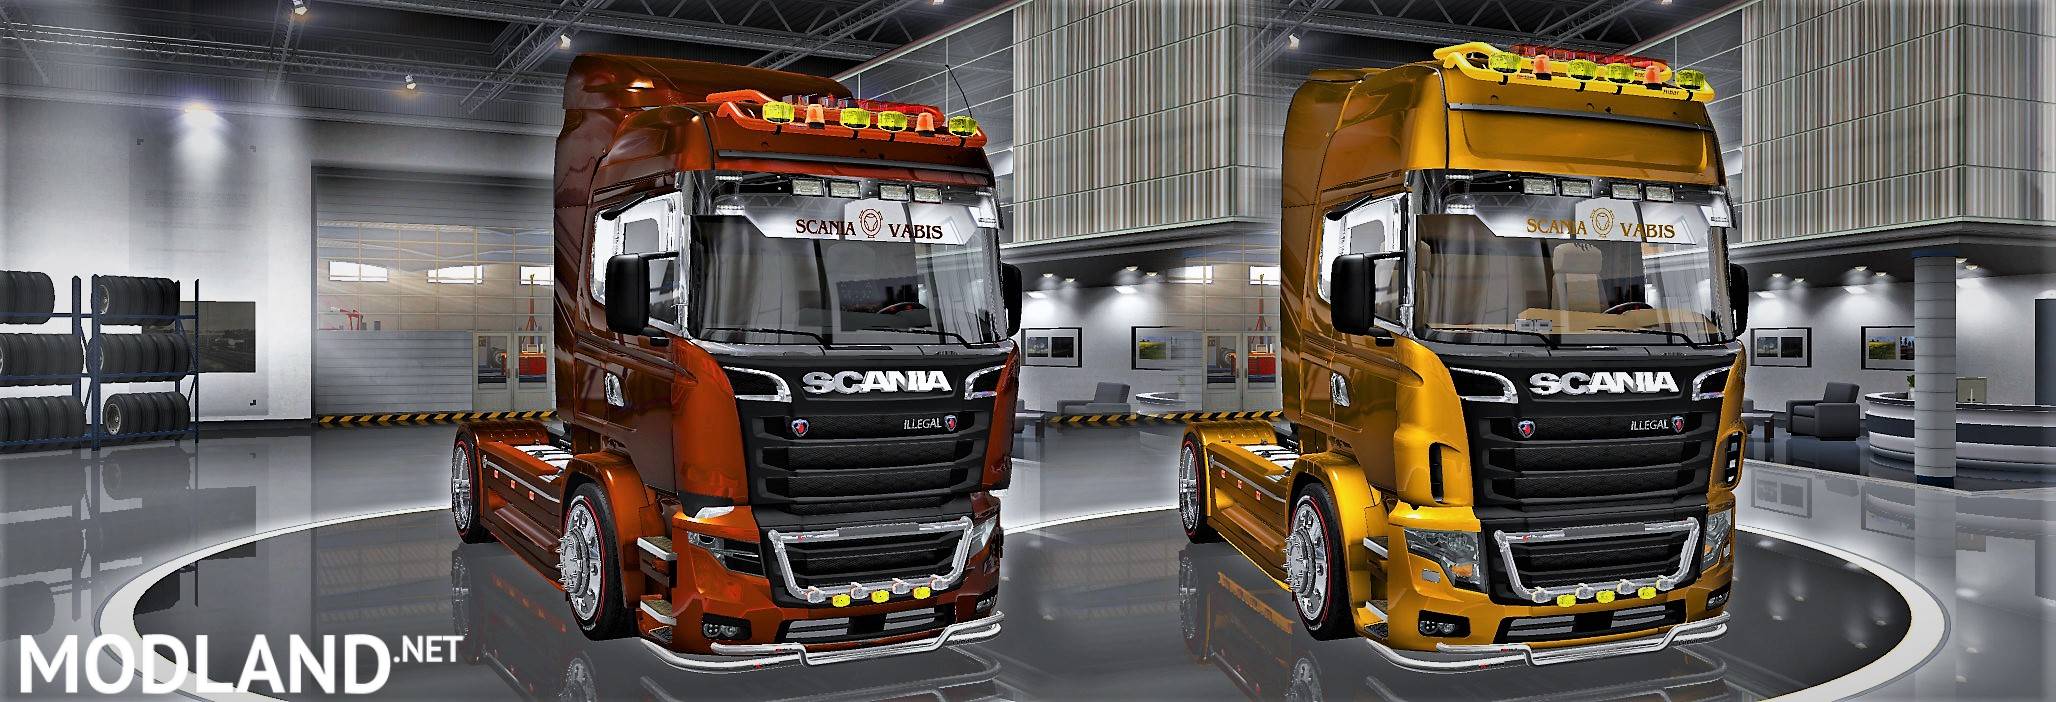 Modified Beautiful Scania Trucks - Trucks Wallpaper 